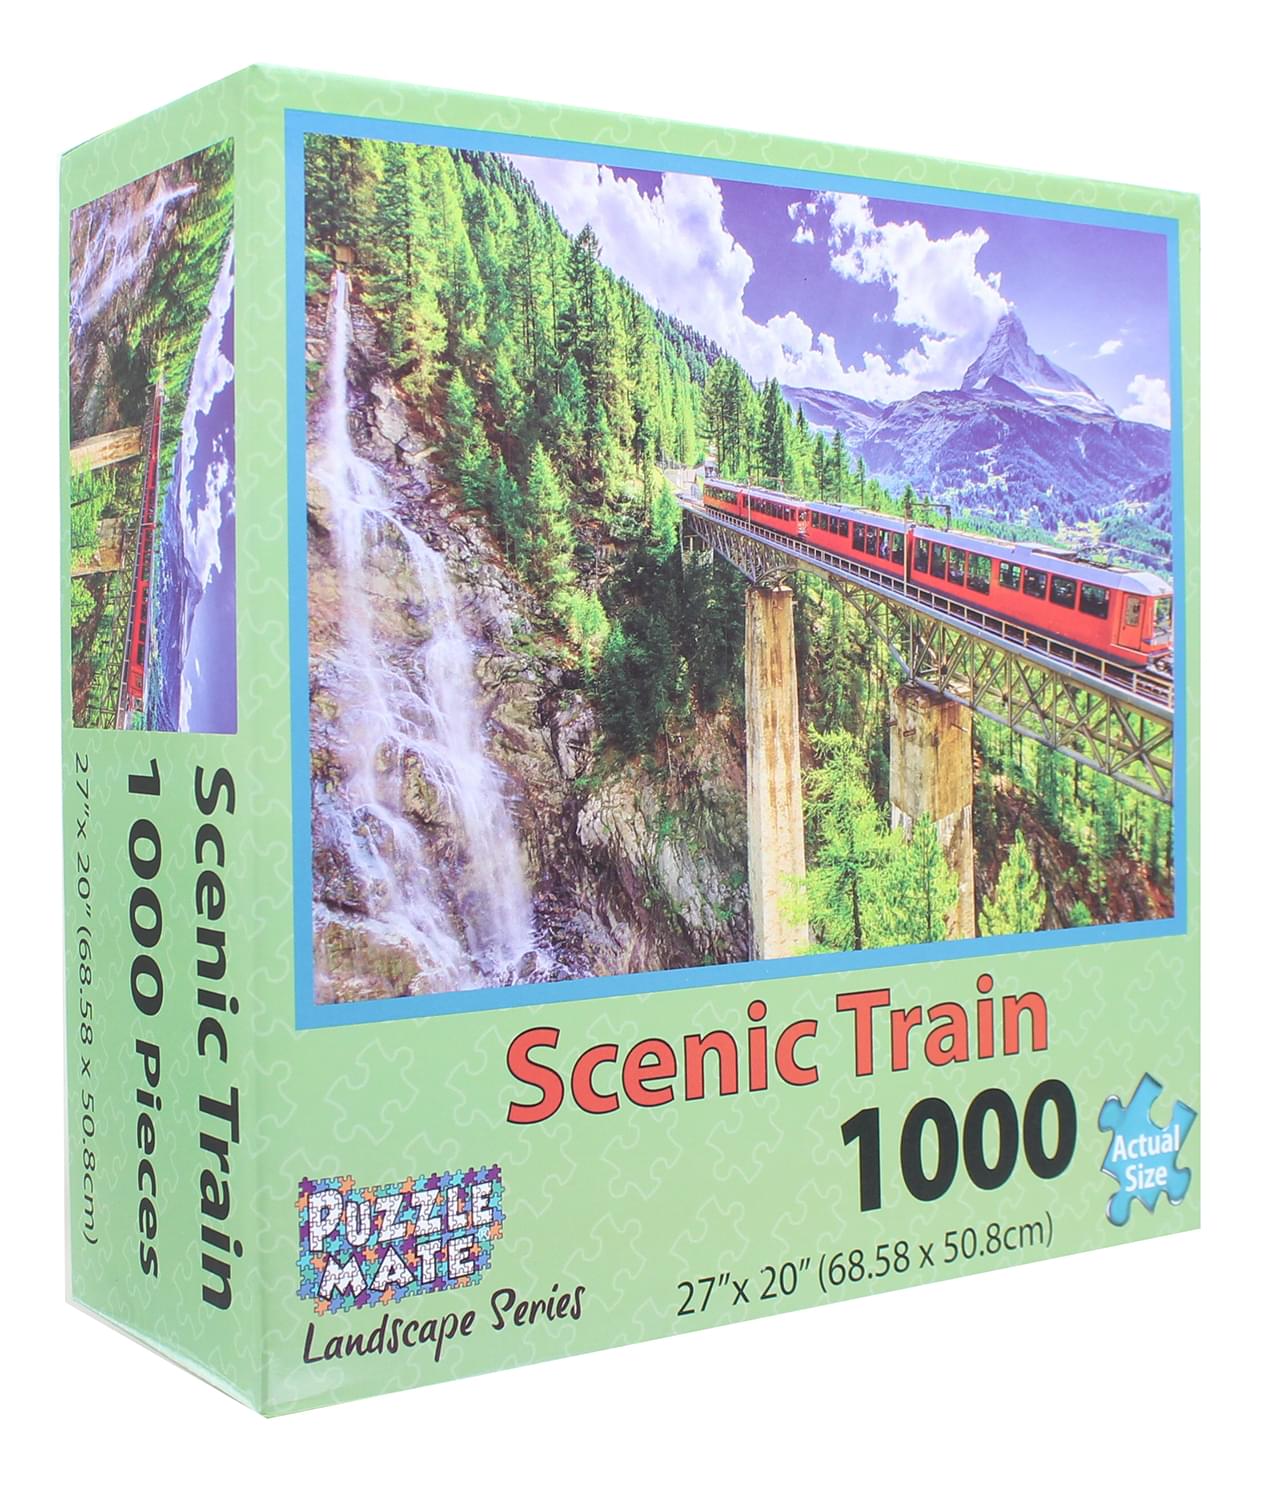 Scenic Train 1000 Piece Jigsaw Puzzle